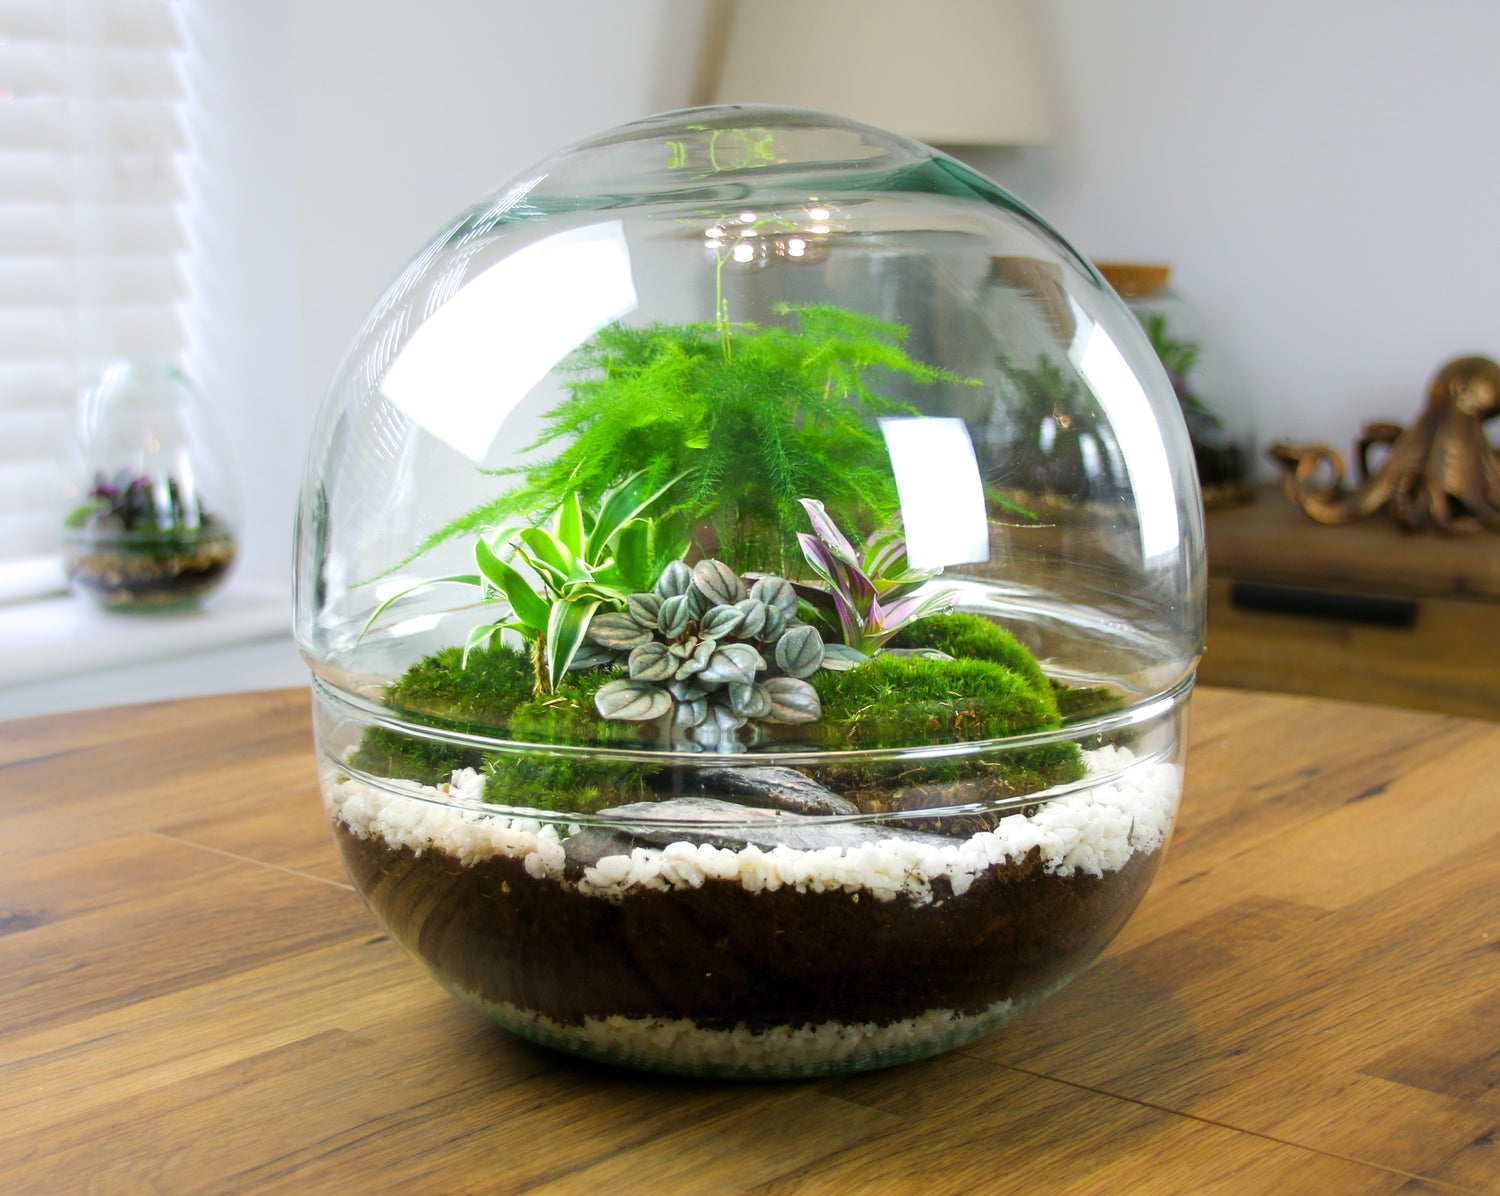 Glass orb terrarium kit with living plants